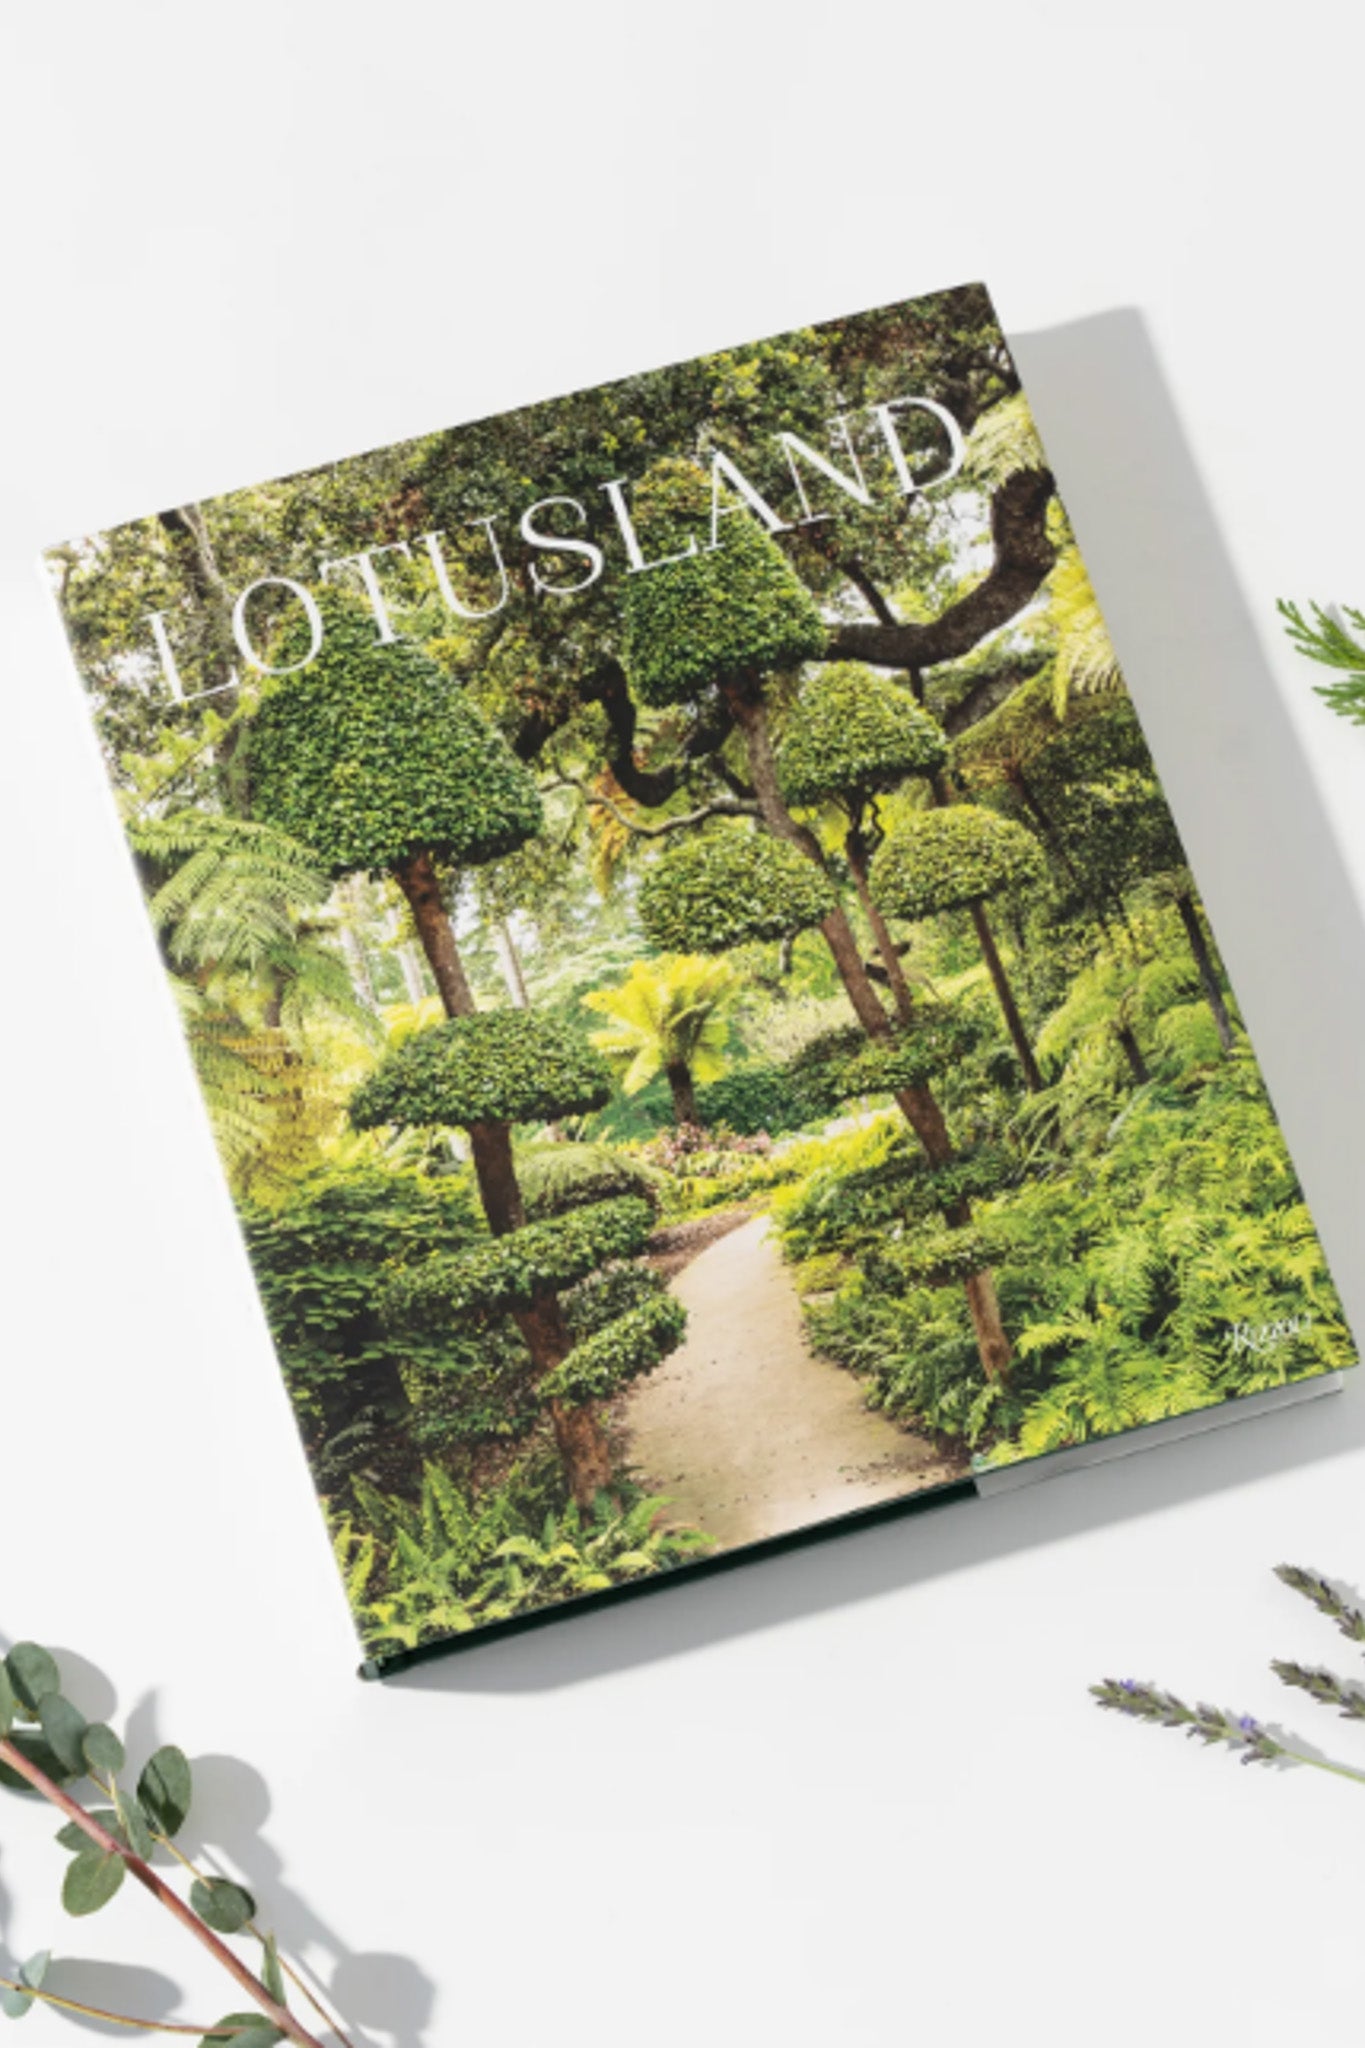 Lotusland Book